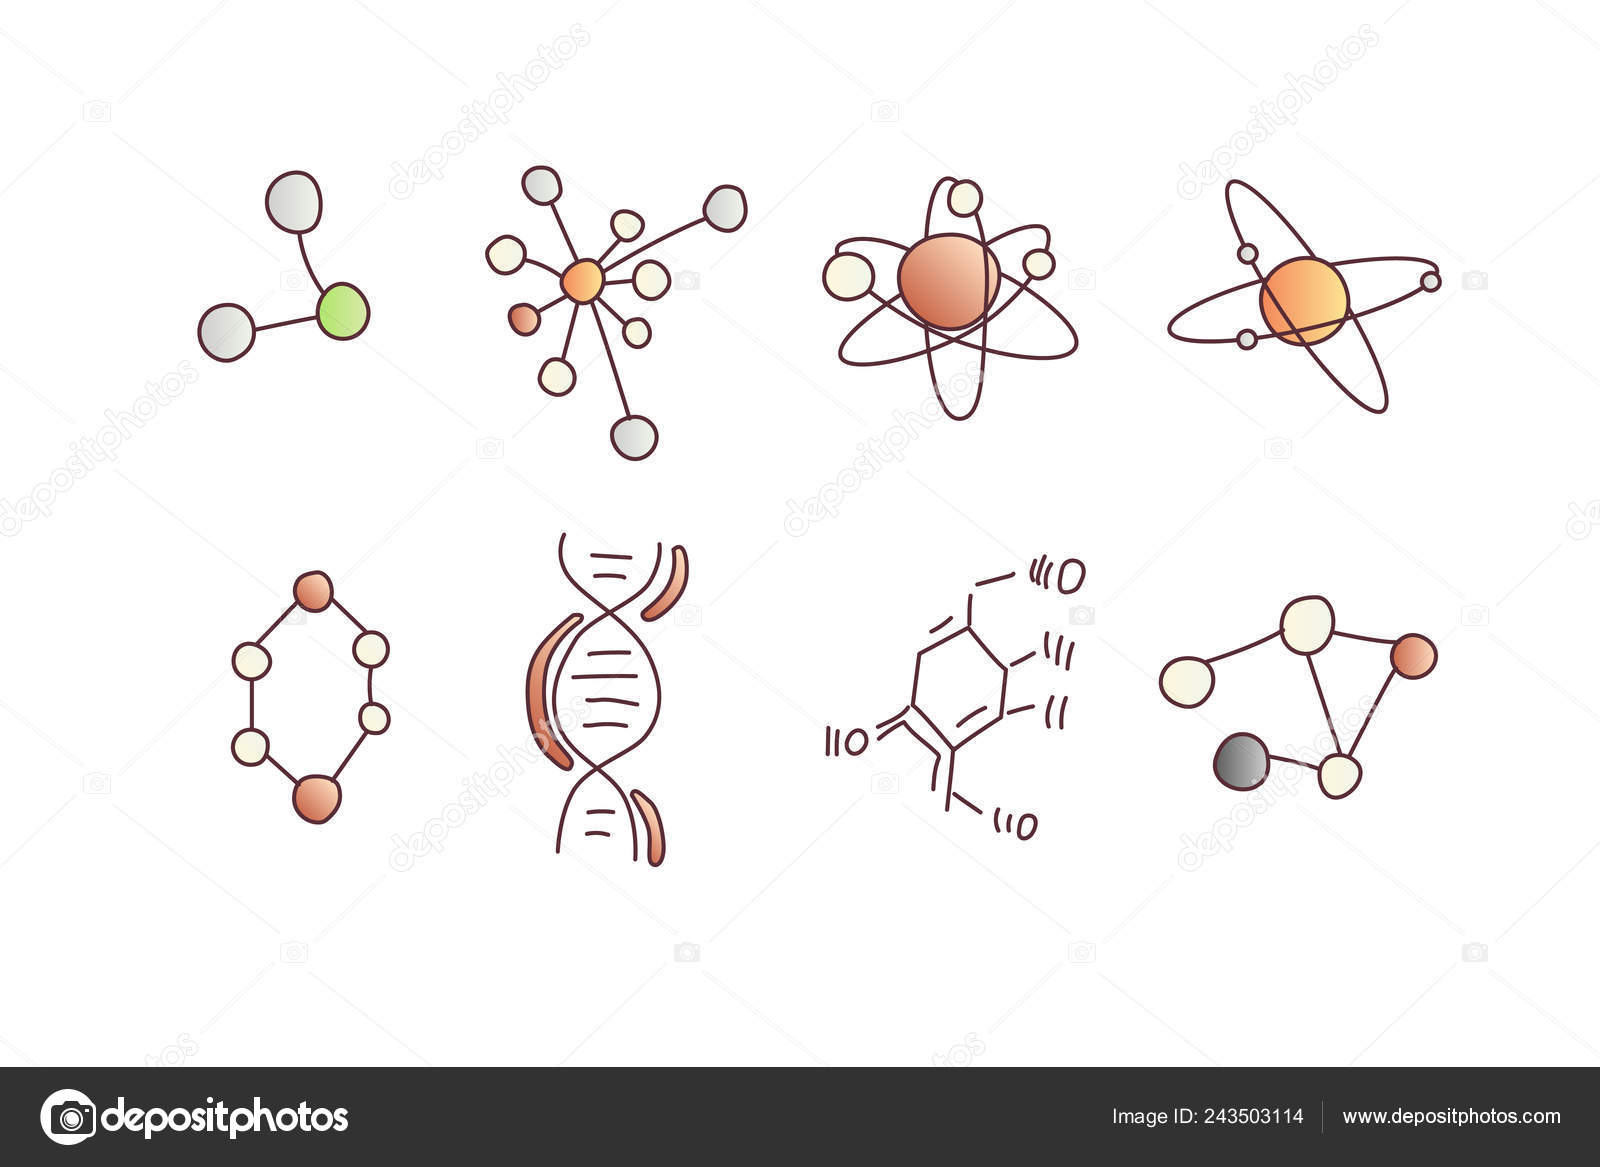 Cute cartoon molecule and atom icon set. Atomic and molecular